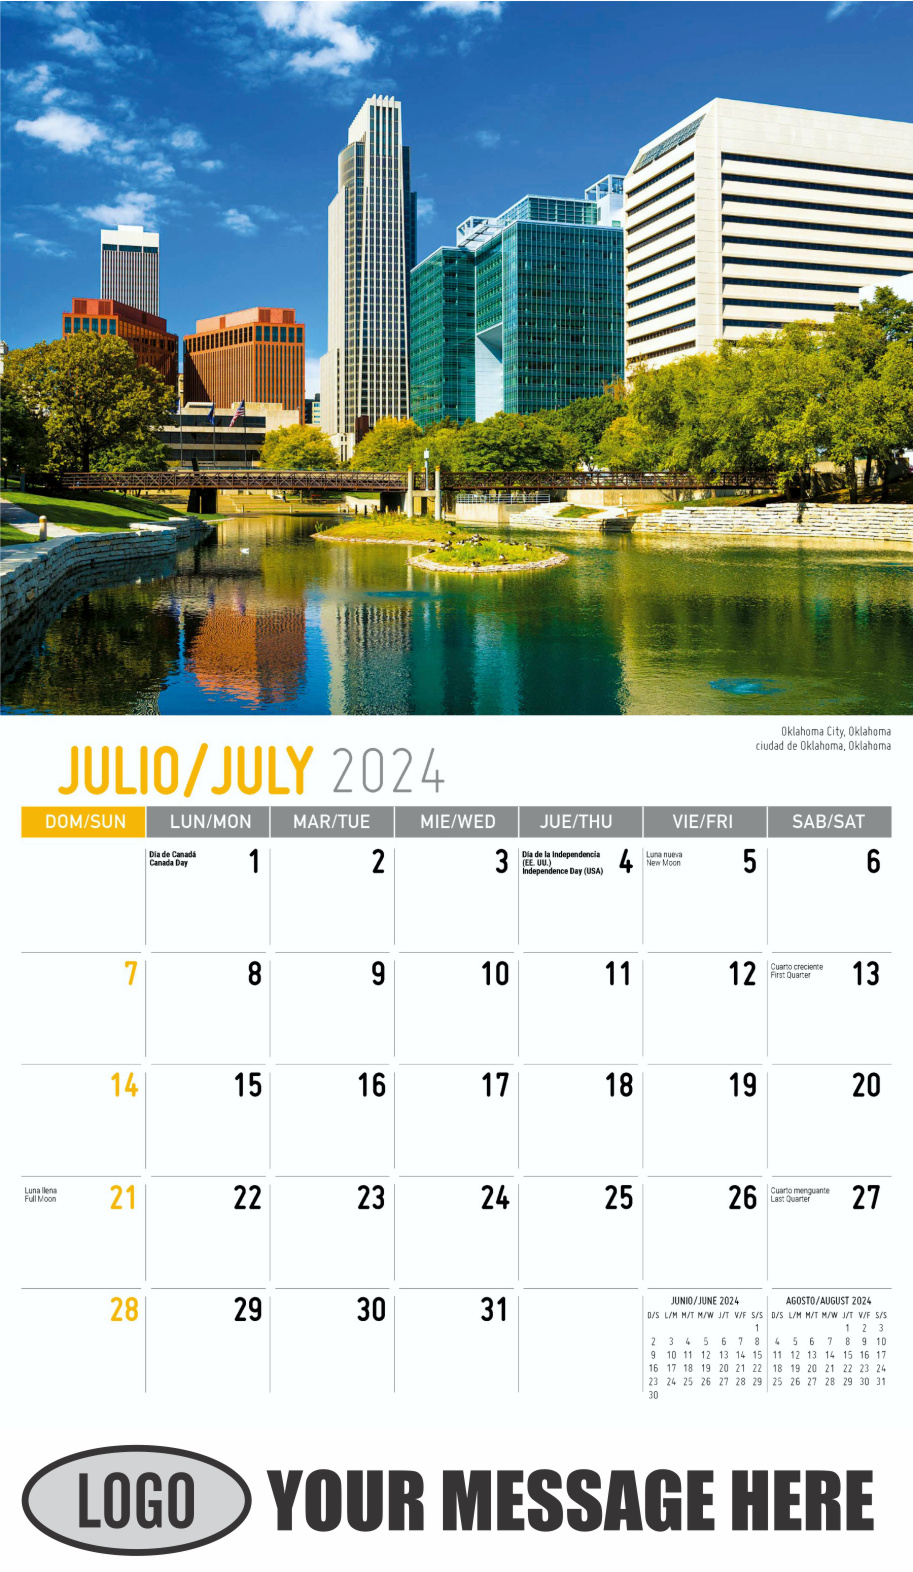 Scenes of America 2024 Bilingual Business Promo Calendar - July